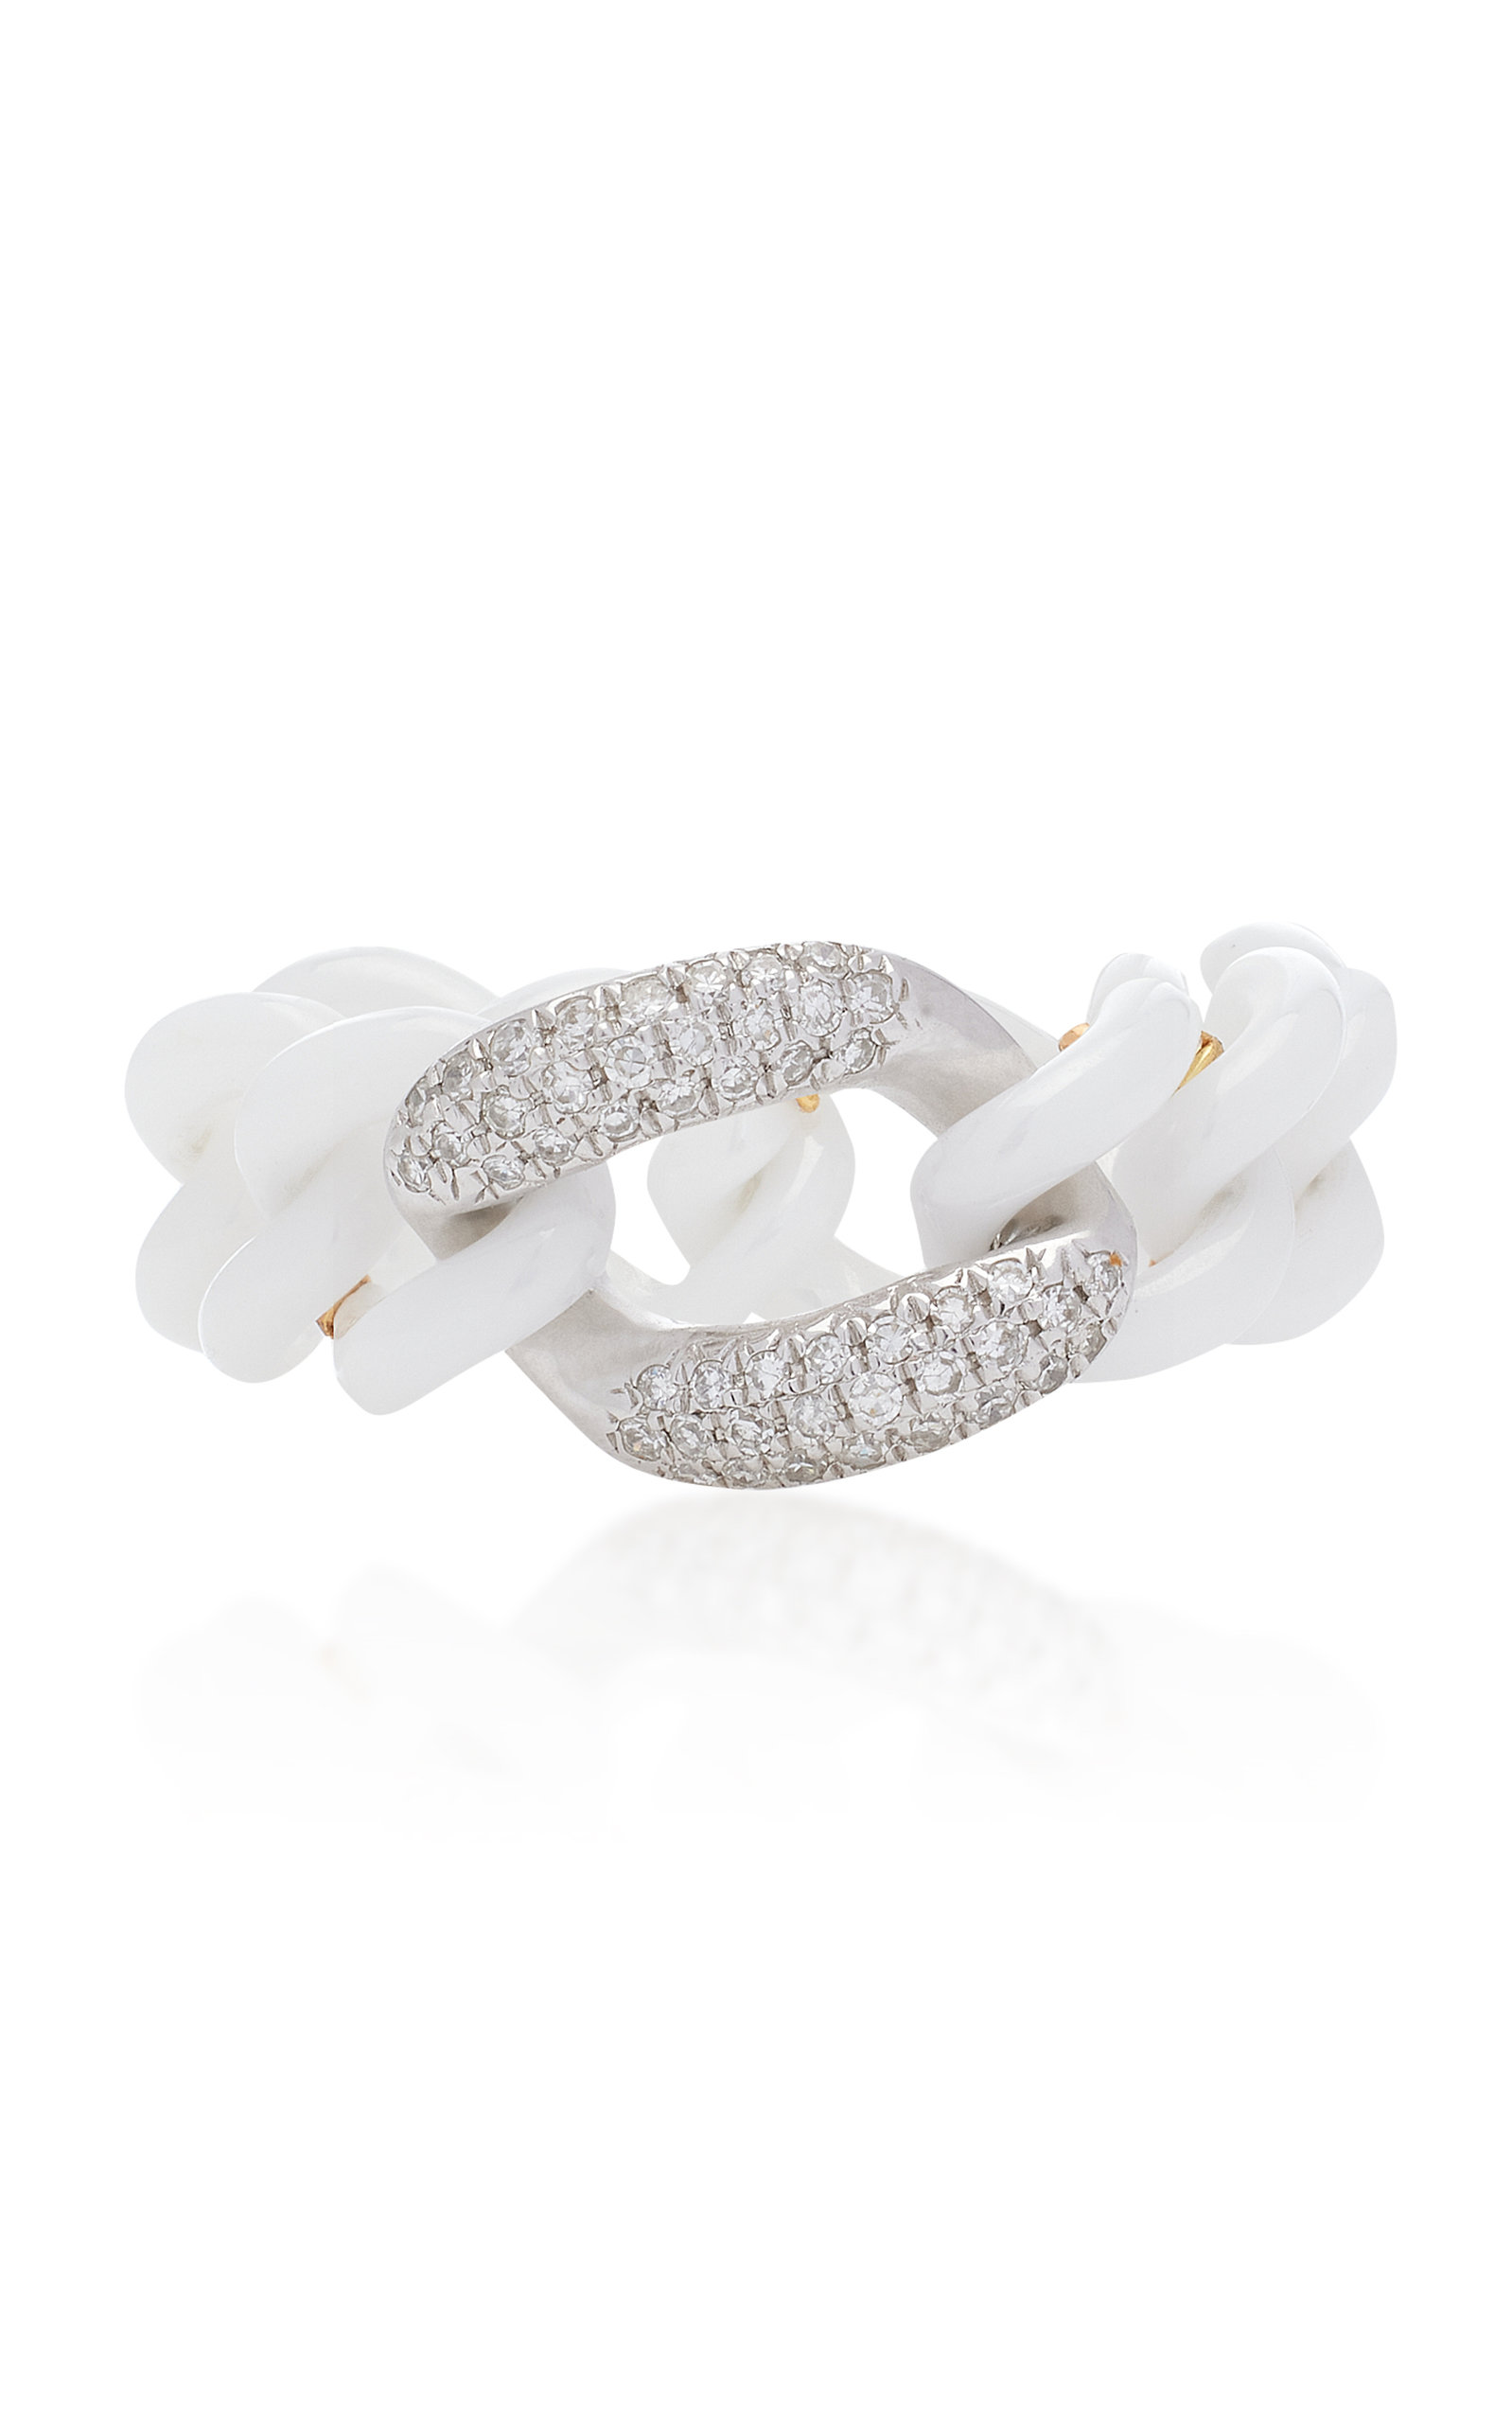 SHAY - Medium Ceramic; 18K White Gold Diamond Link Ring - White - US 6.5 - Moda Operandi - Gifts For Her